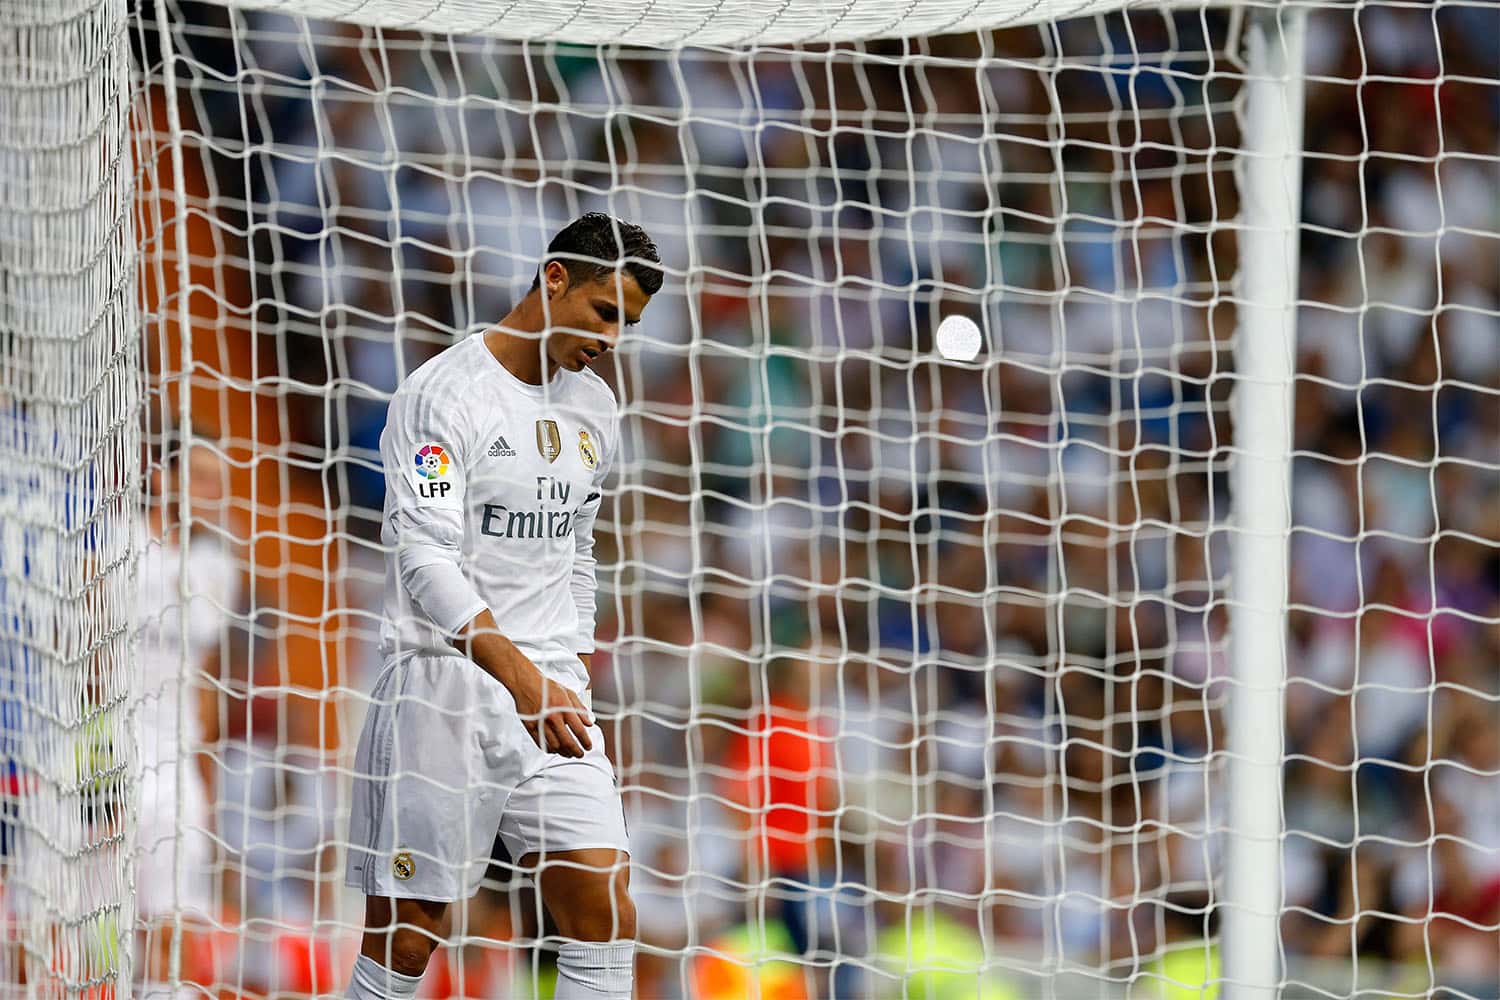 Cristiano Ronaldo leaves his future in Madrid uncertain